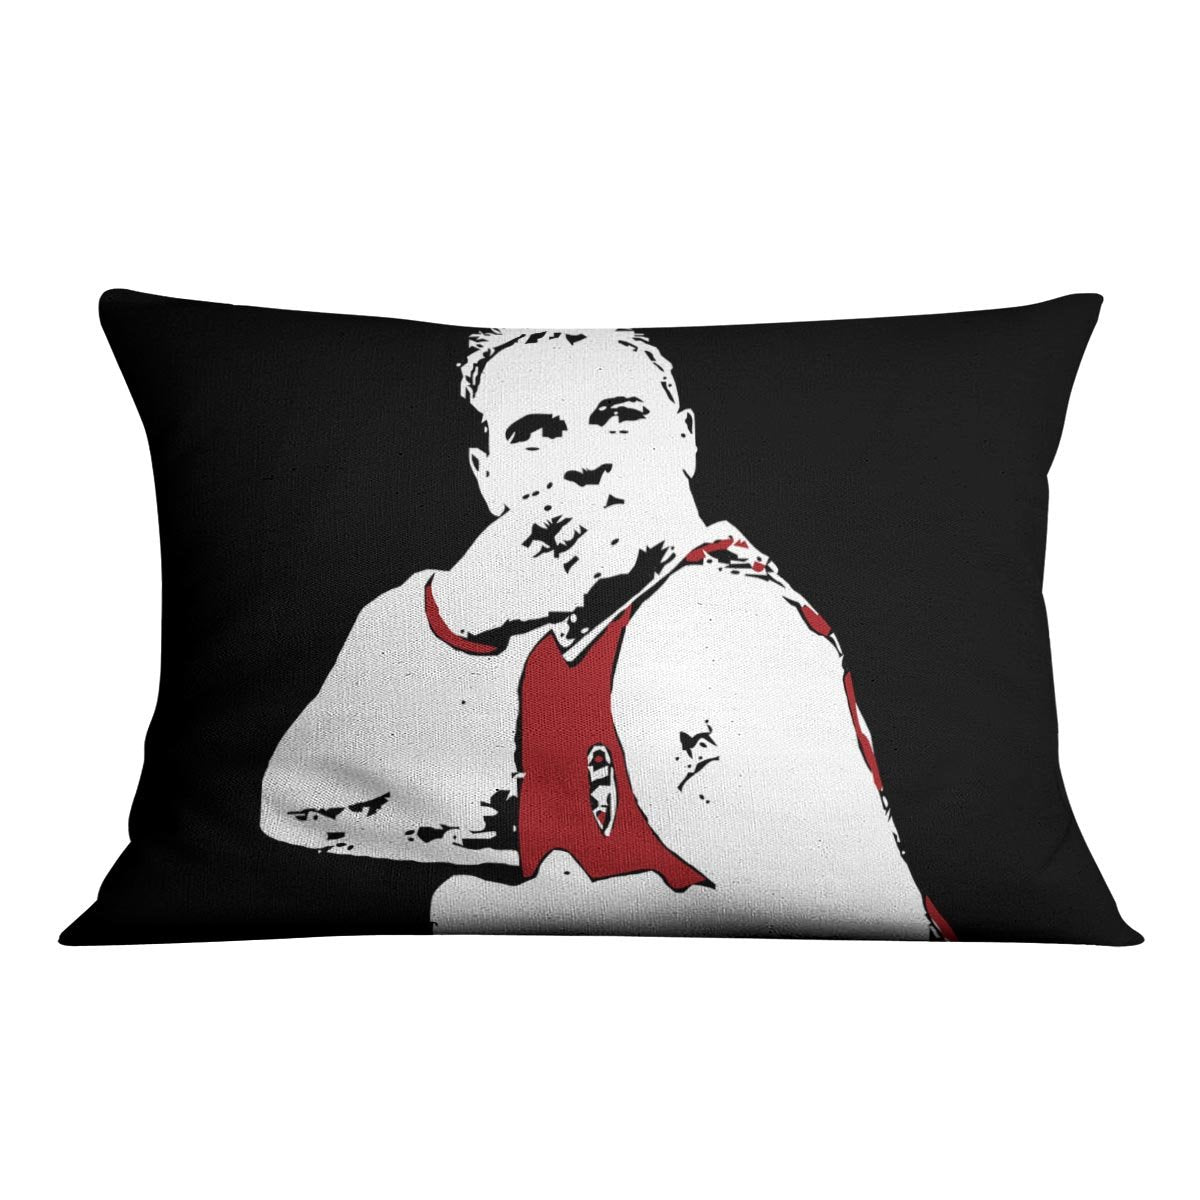 Dennis Bergkamp Close Up Cushion